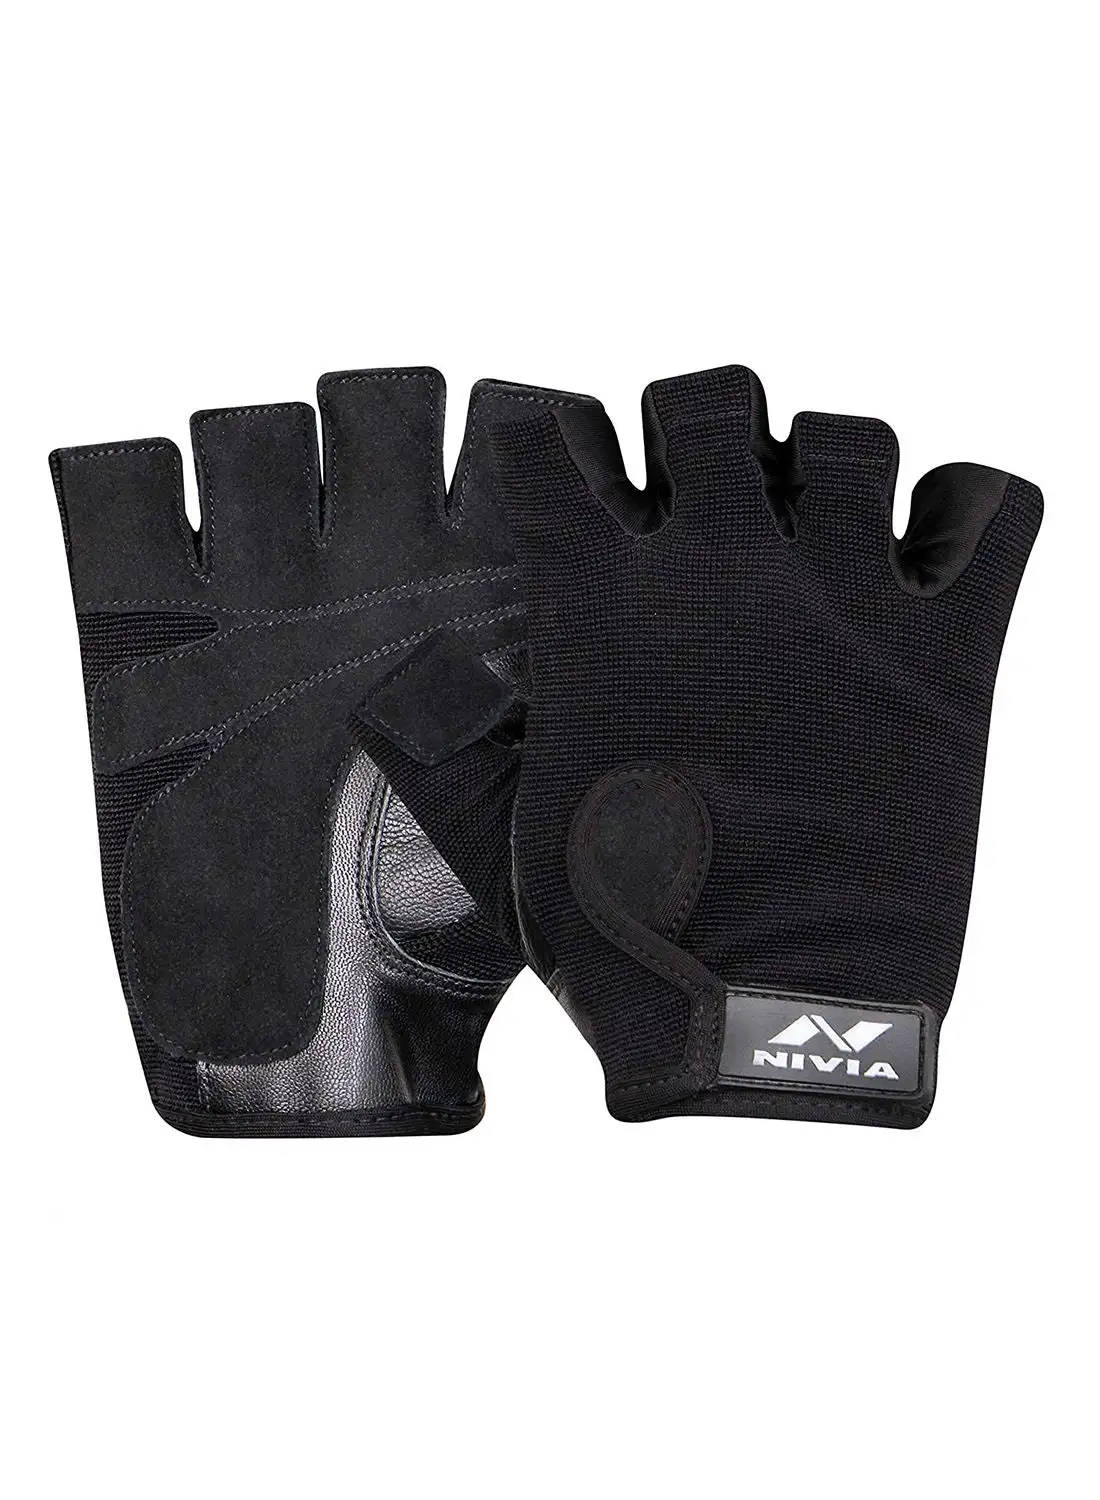 Nivia New Dragon 2.0 Sports Glove